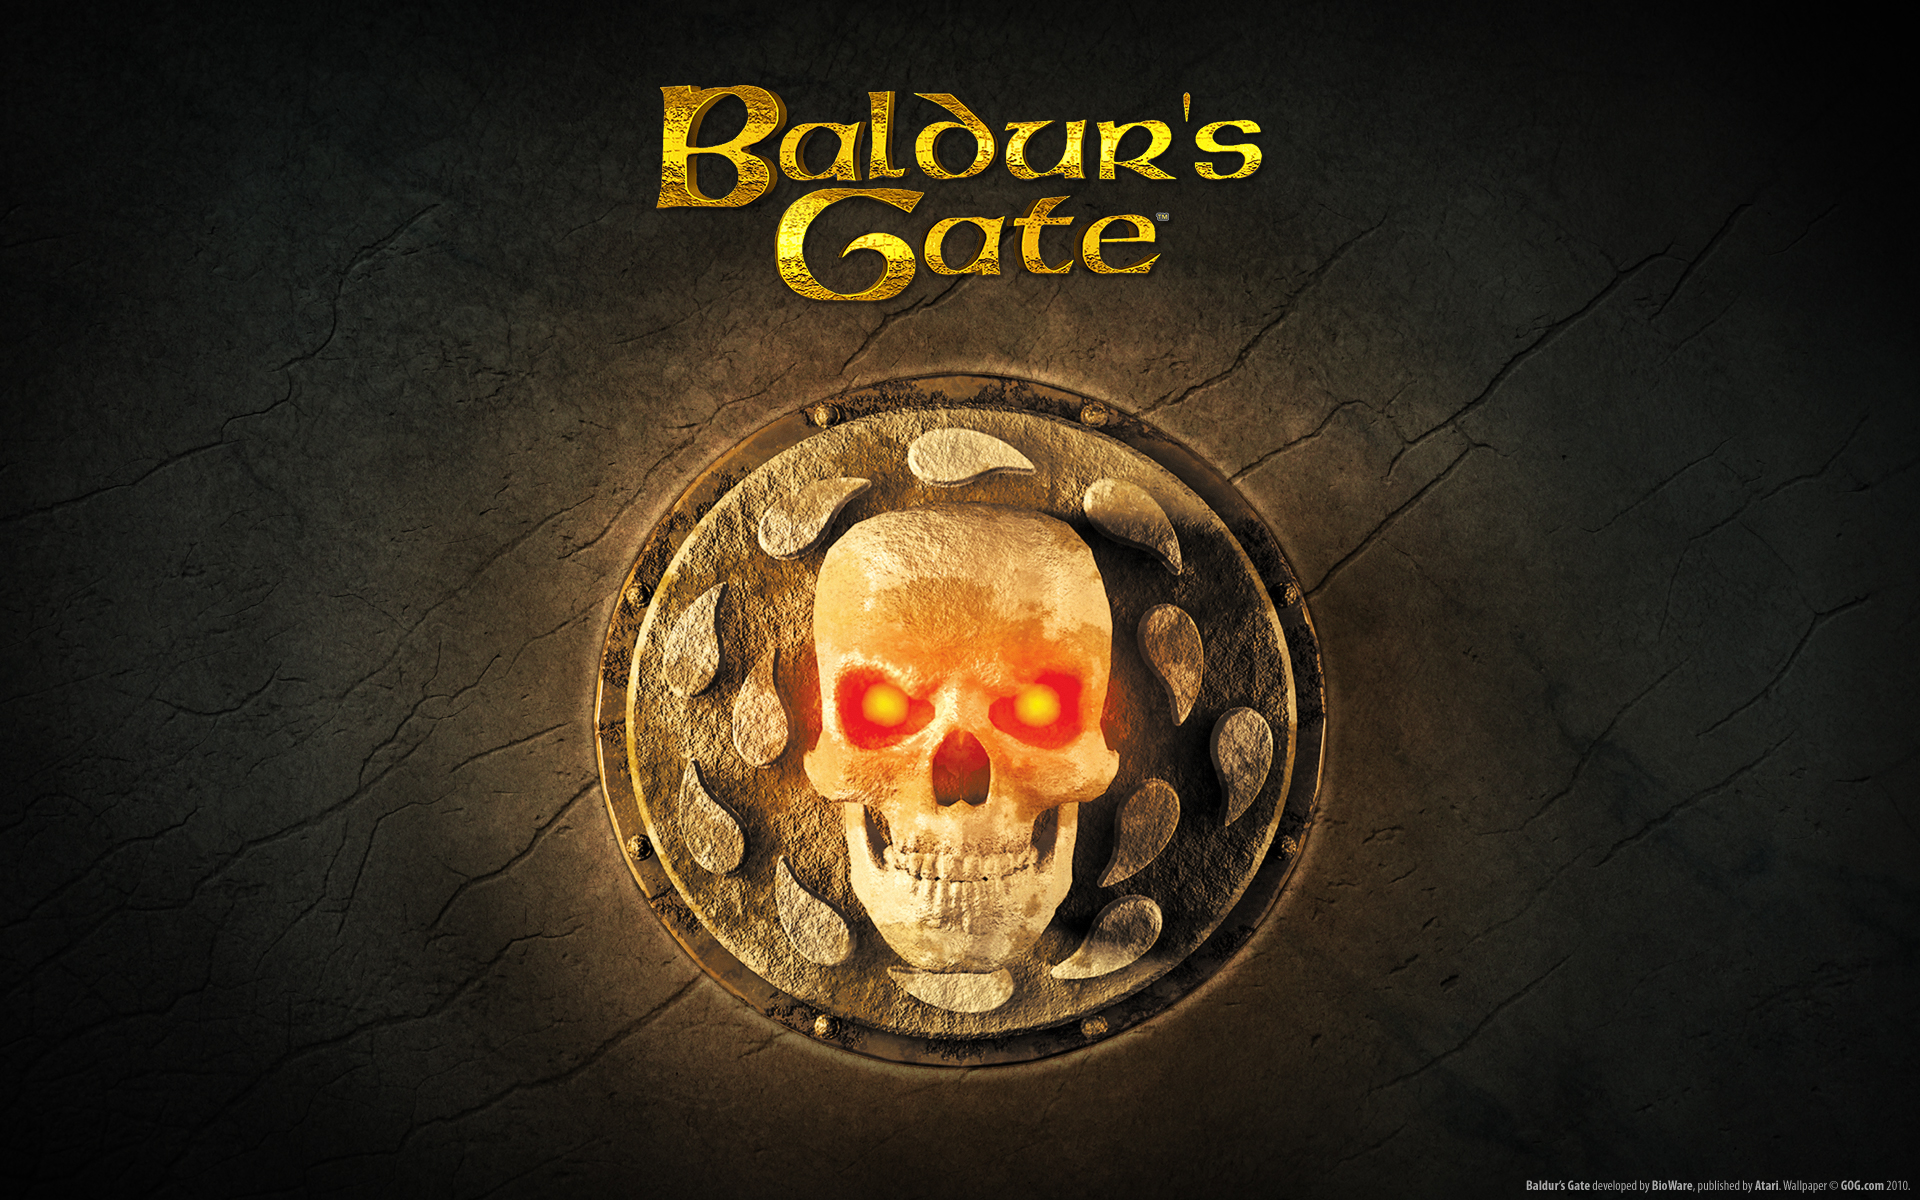 New “Baldur’s Gate” Game In Development - Will Bridge The Stories Between 